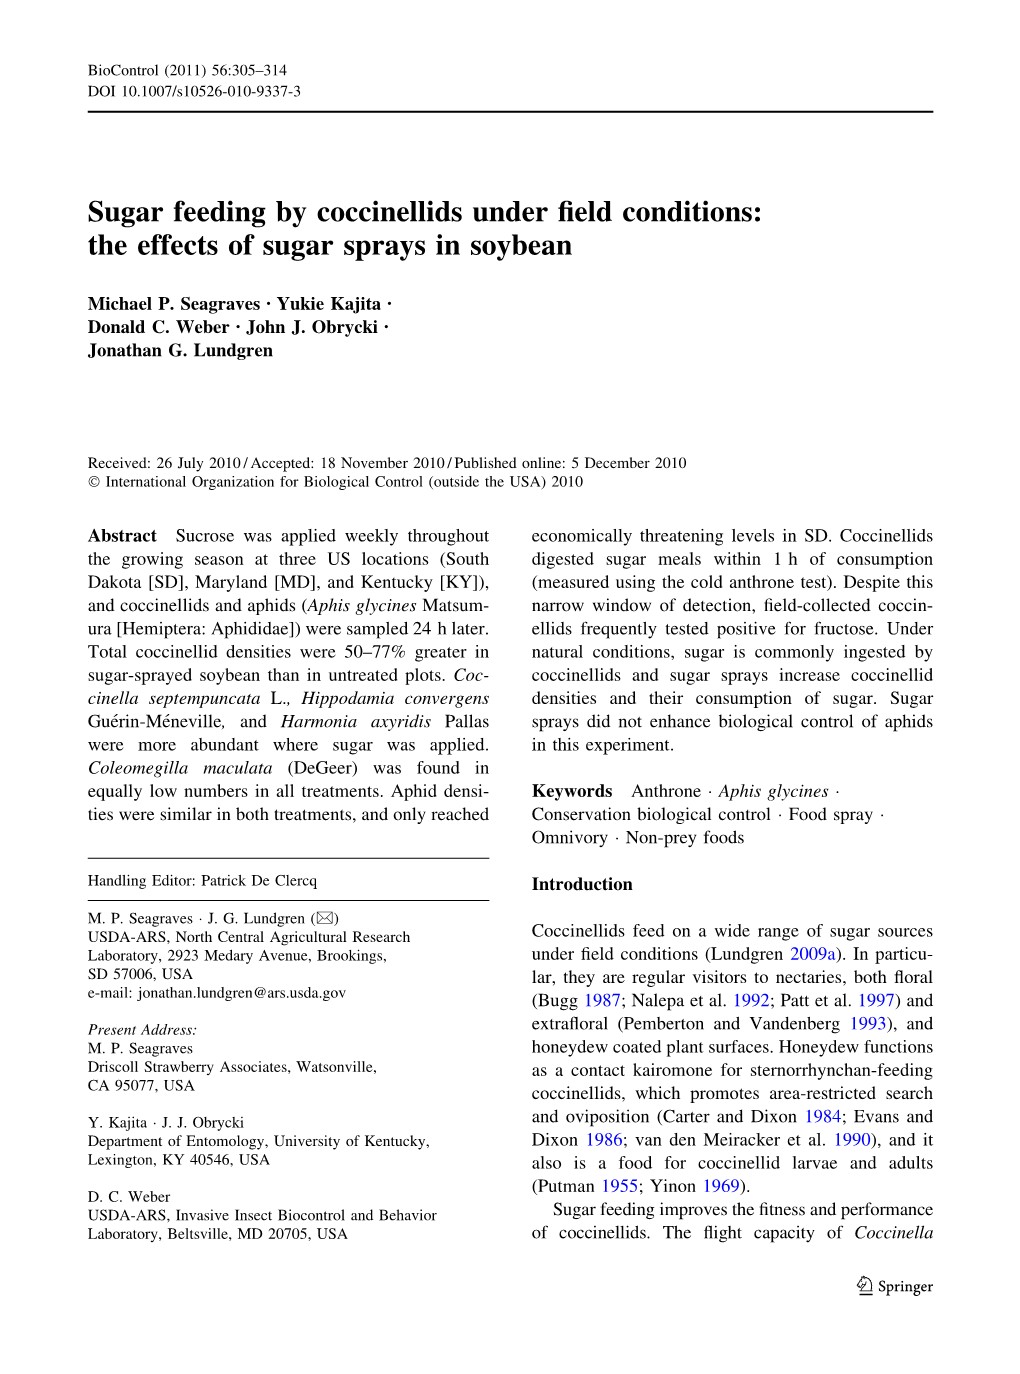 Sugar Feeding by Coccinellids Under Field Conditions